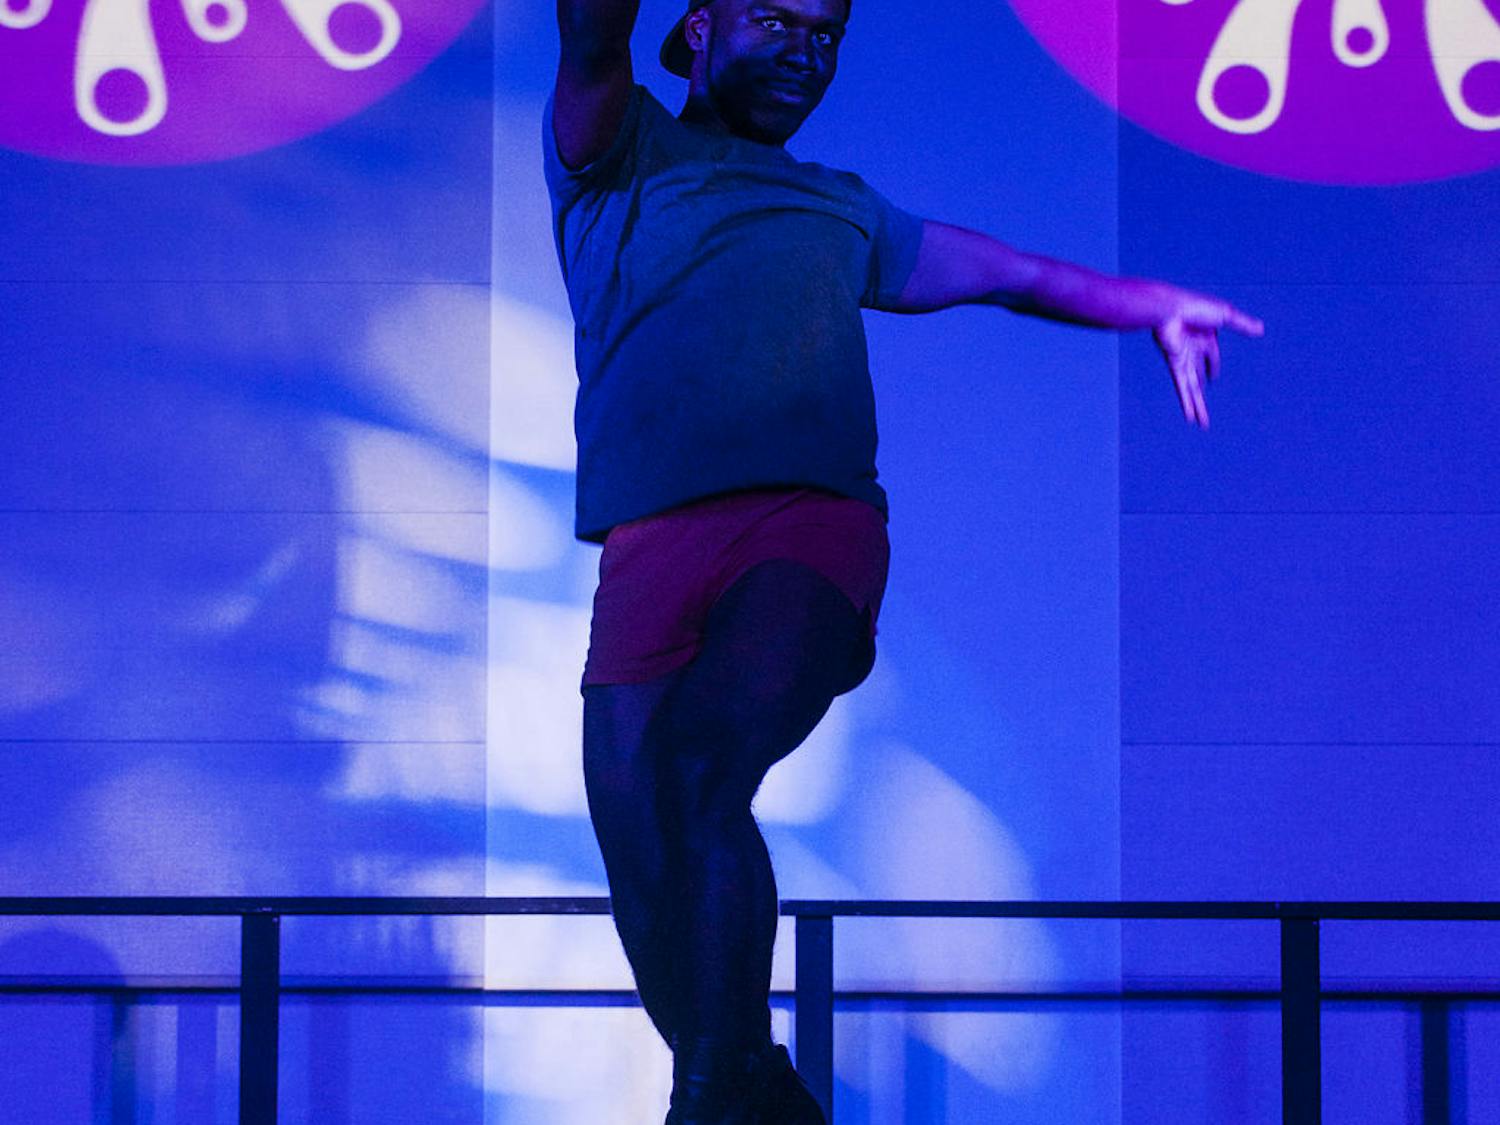 Jabari Taylor dances onstage during his performance.